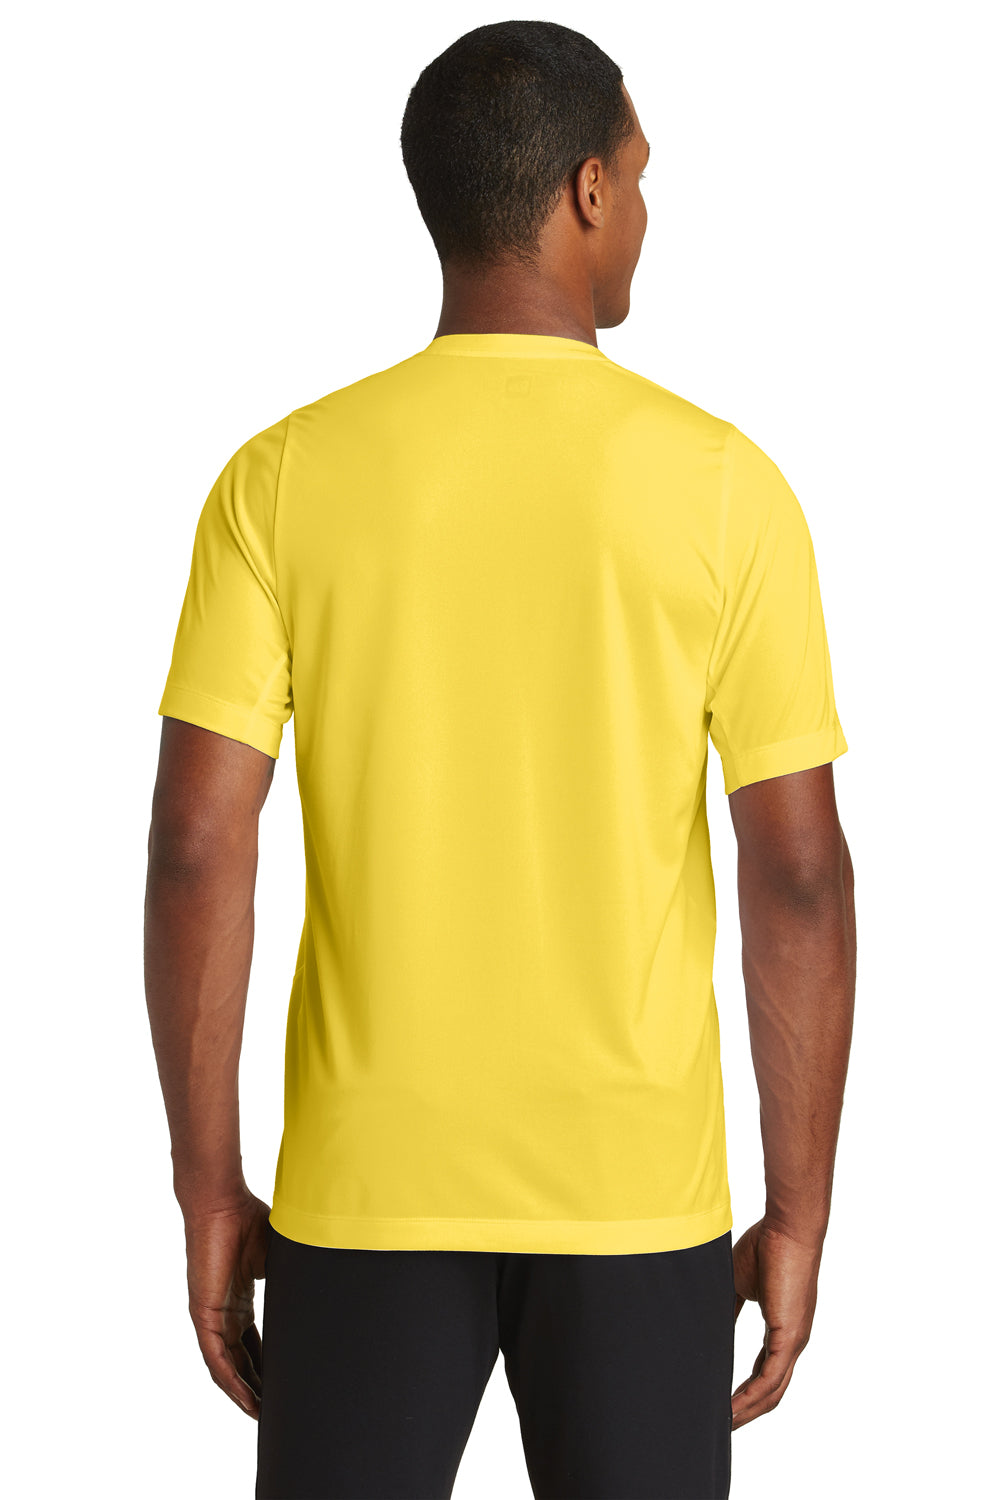 New Era NEA200 Mens Series Performance Jersey Moisture Wicking Short Sleeve Crewneck T-Shirt Goldenrod Yellow Back